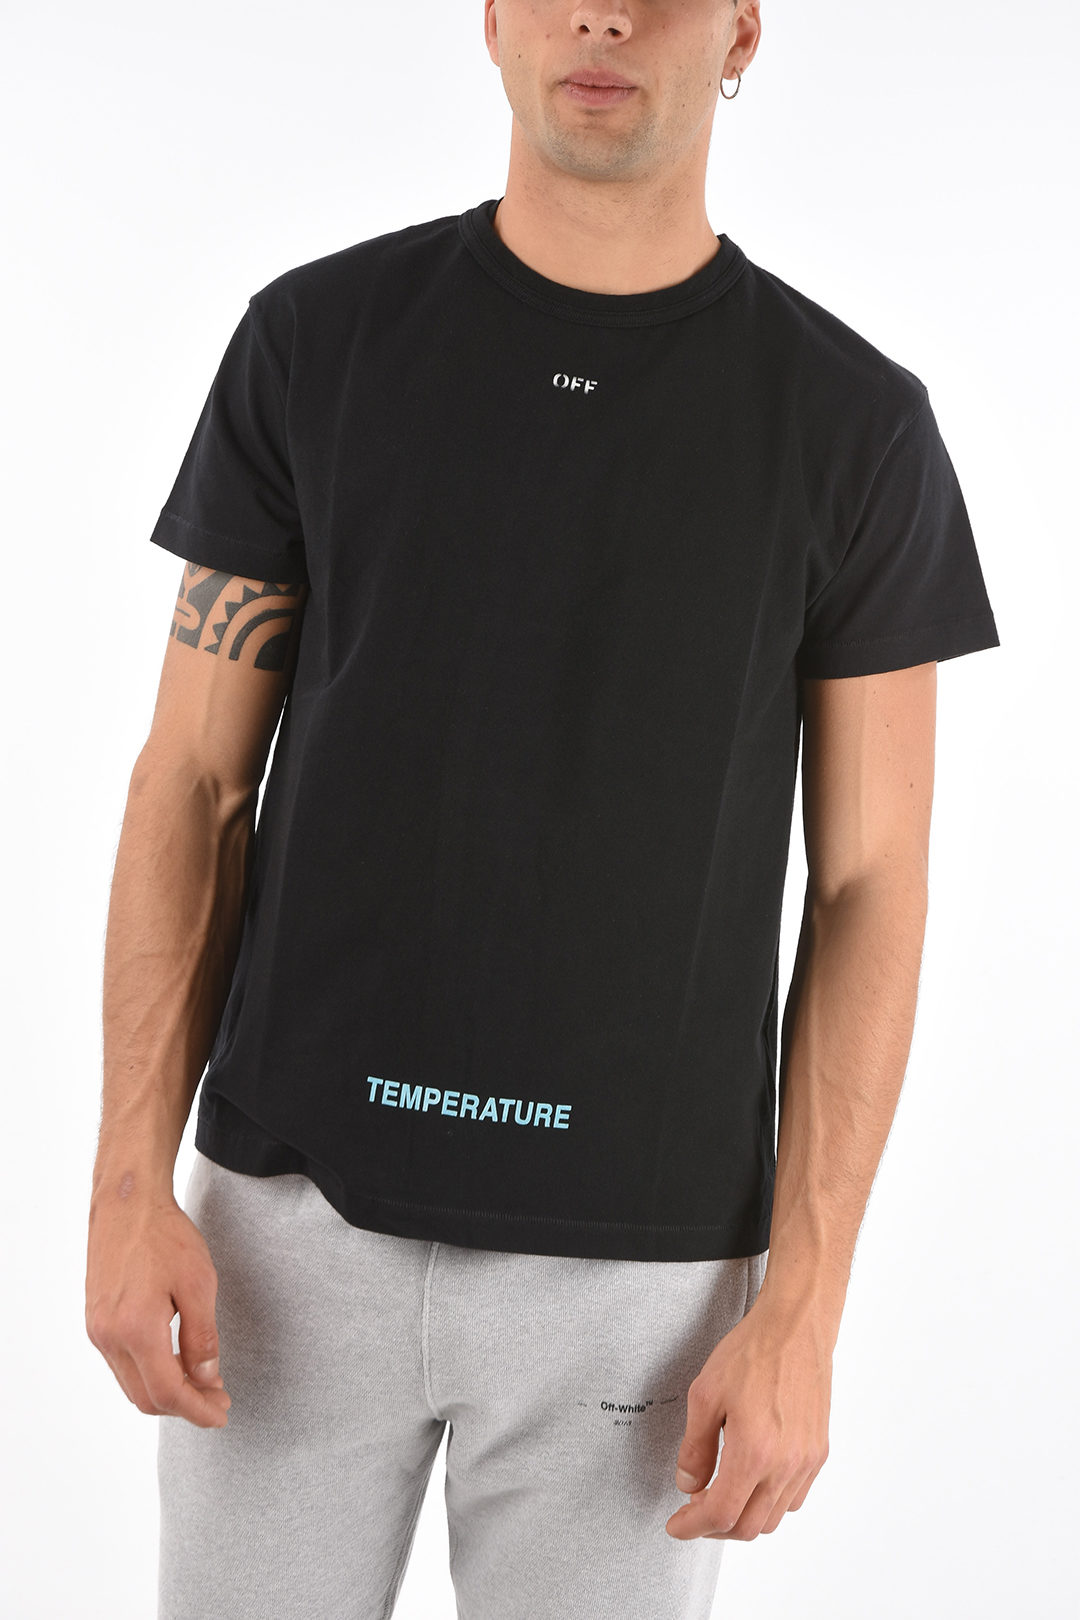 Caius abstraktion spektrum Off-White printed DIAG TEMPERATURE t-shirt men - Glamood Outlet